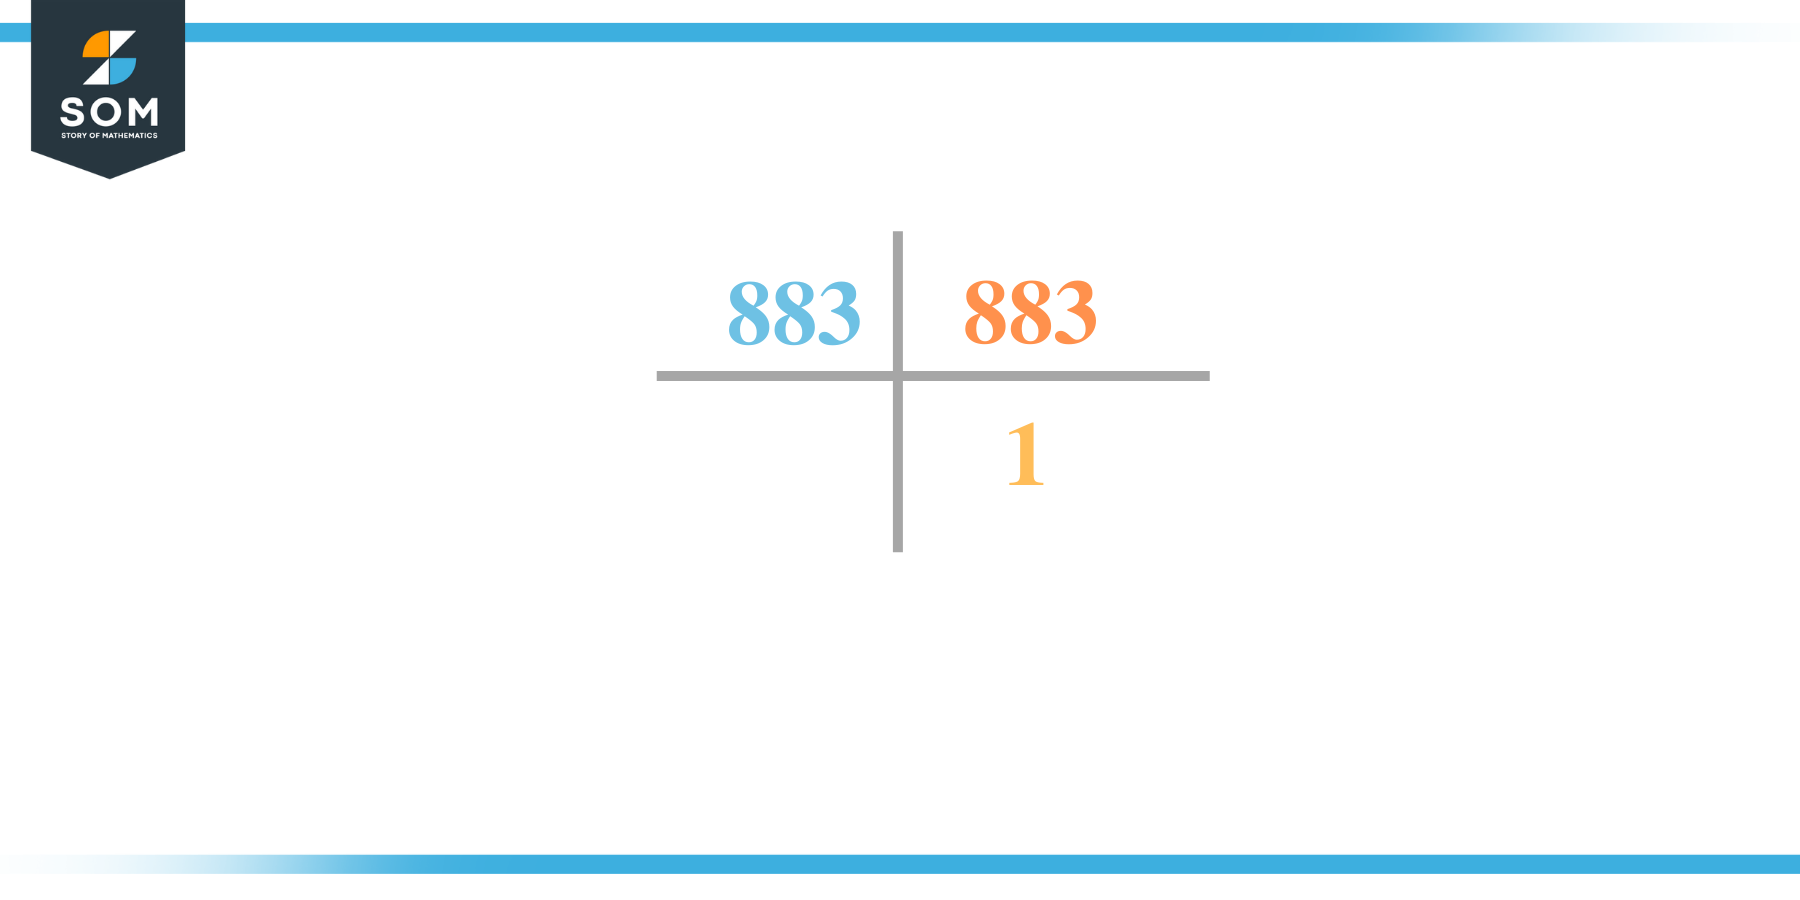 Prime factorization of 883